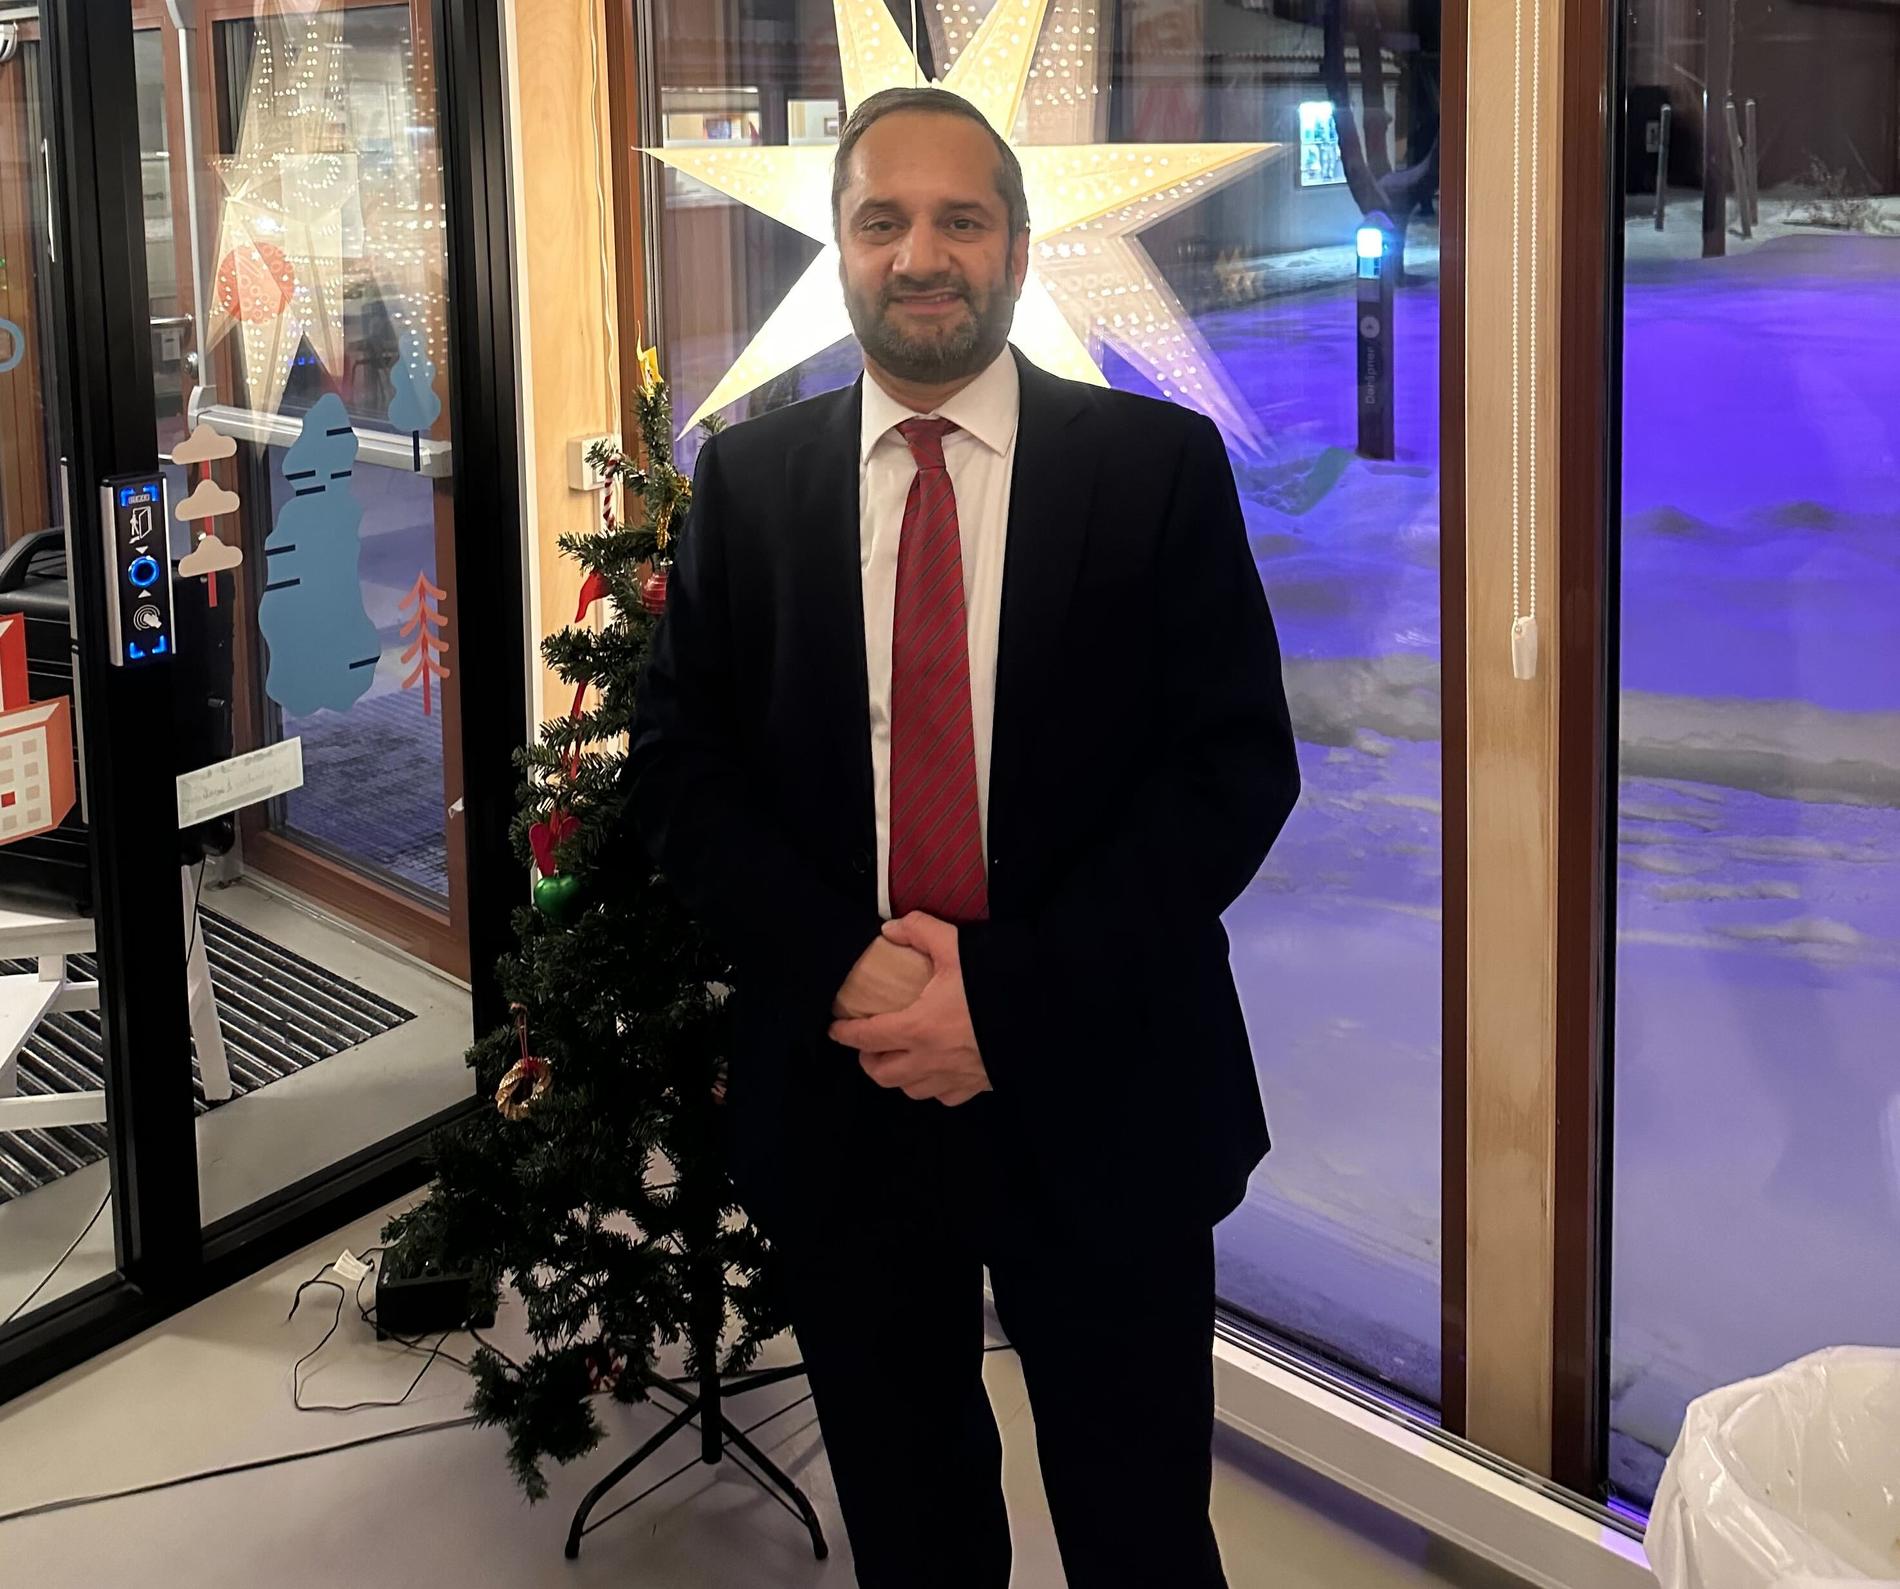 Grorudalen’s Christmas Eve Tradition: Habib Tahir Opens Ammerud Club for Community Celebration